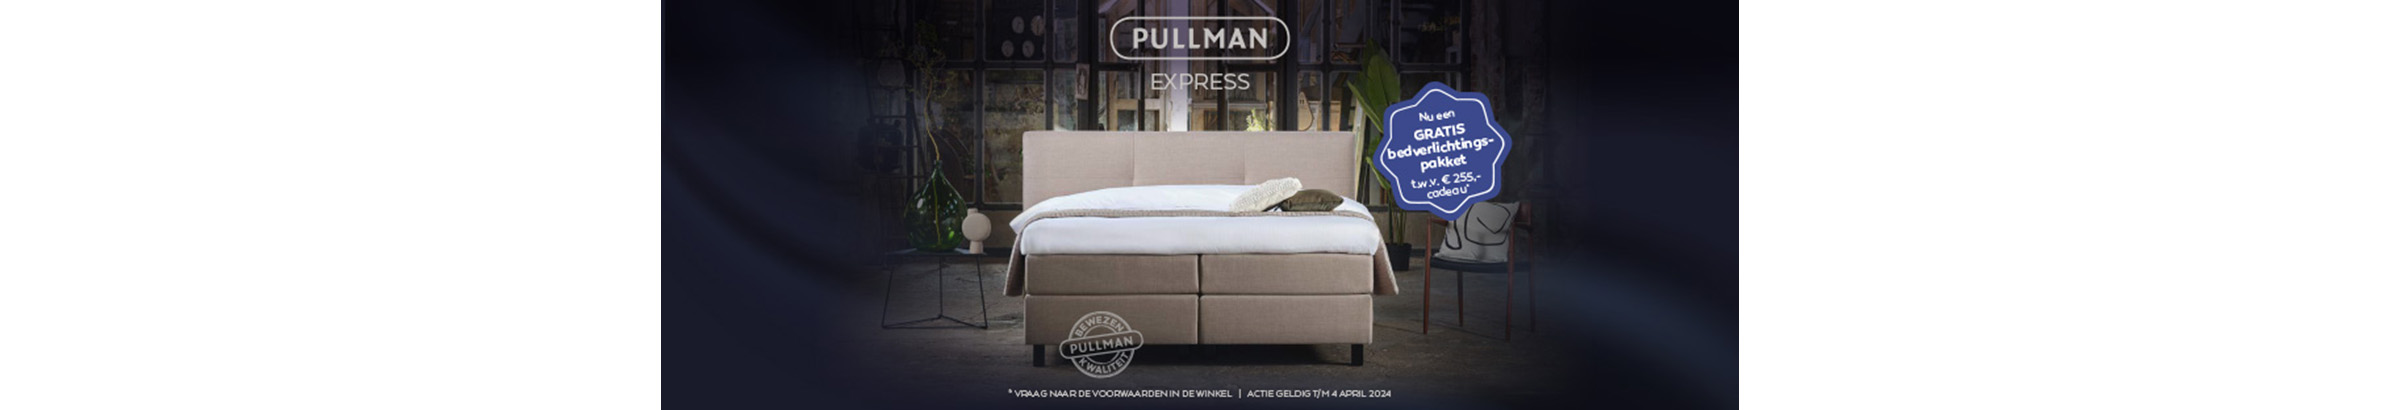 pullman express wk 7 tm wk11 2024